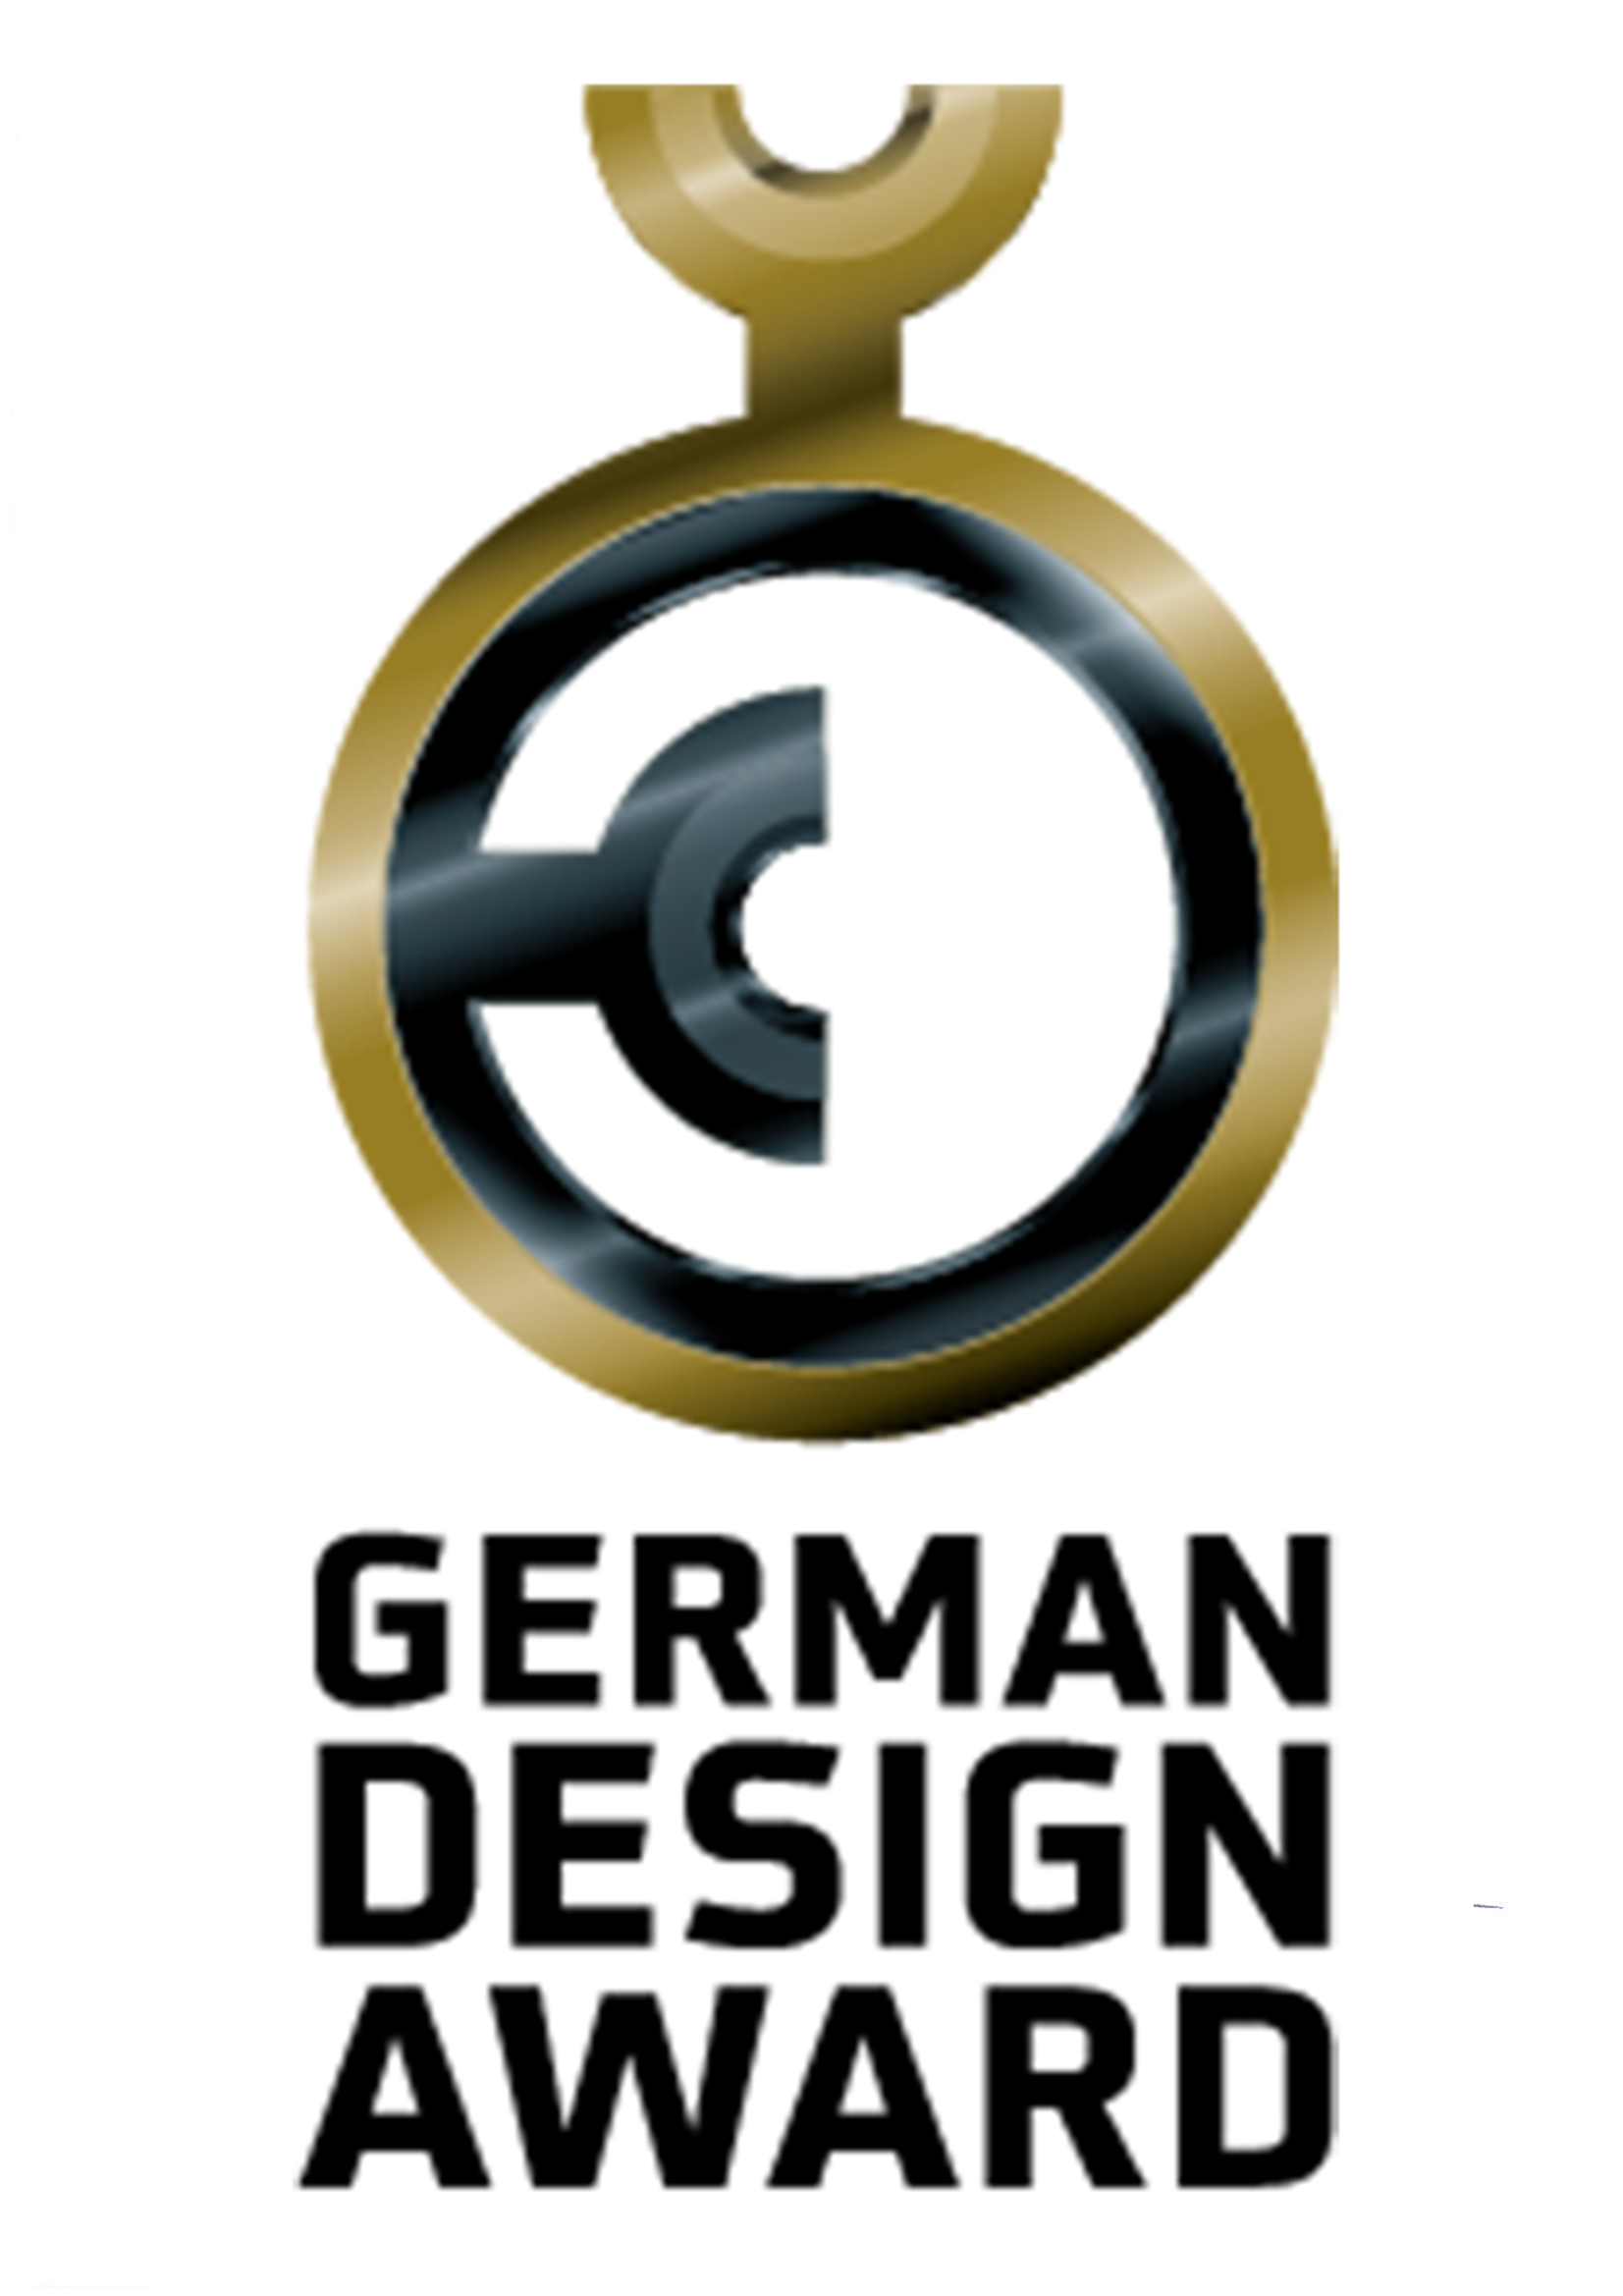 Image of the German Design Award logo